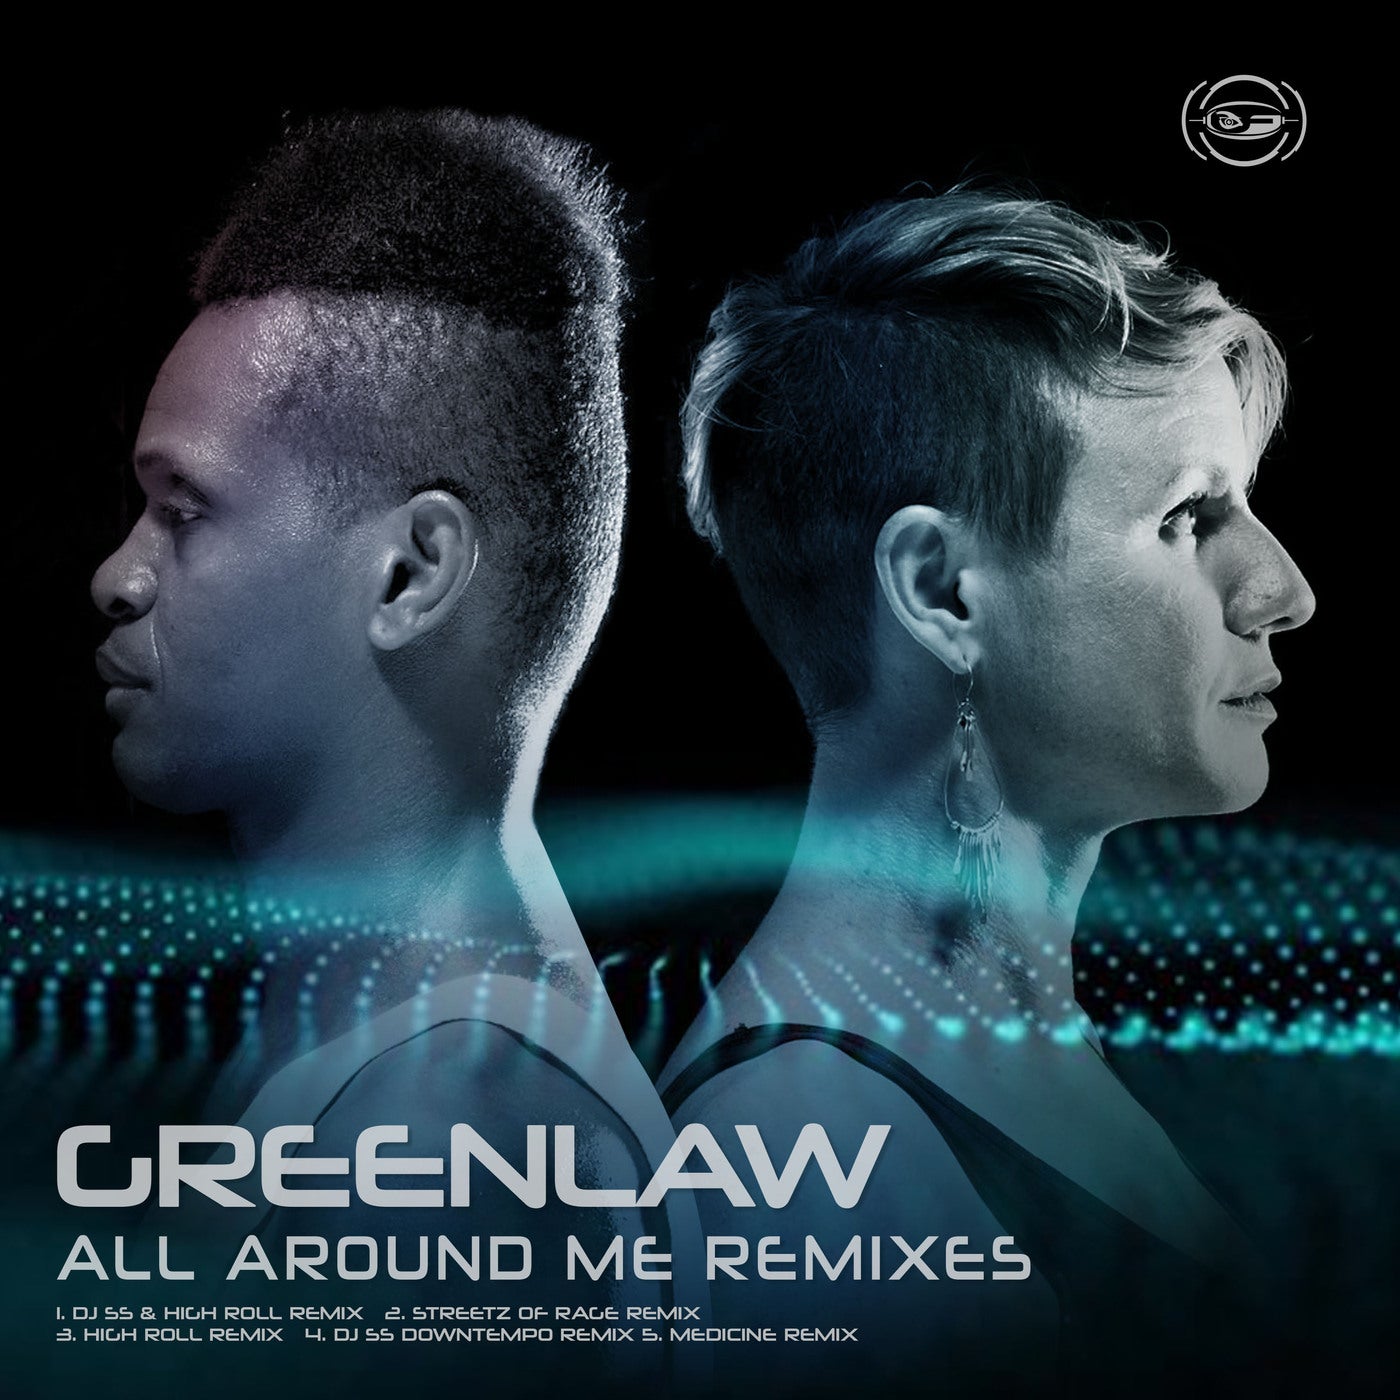 All Around Me (Remixes)